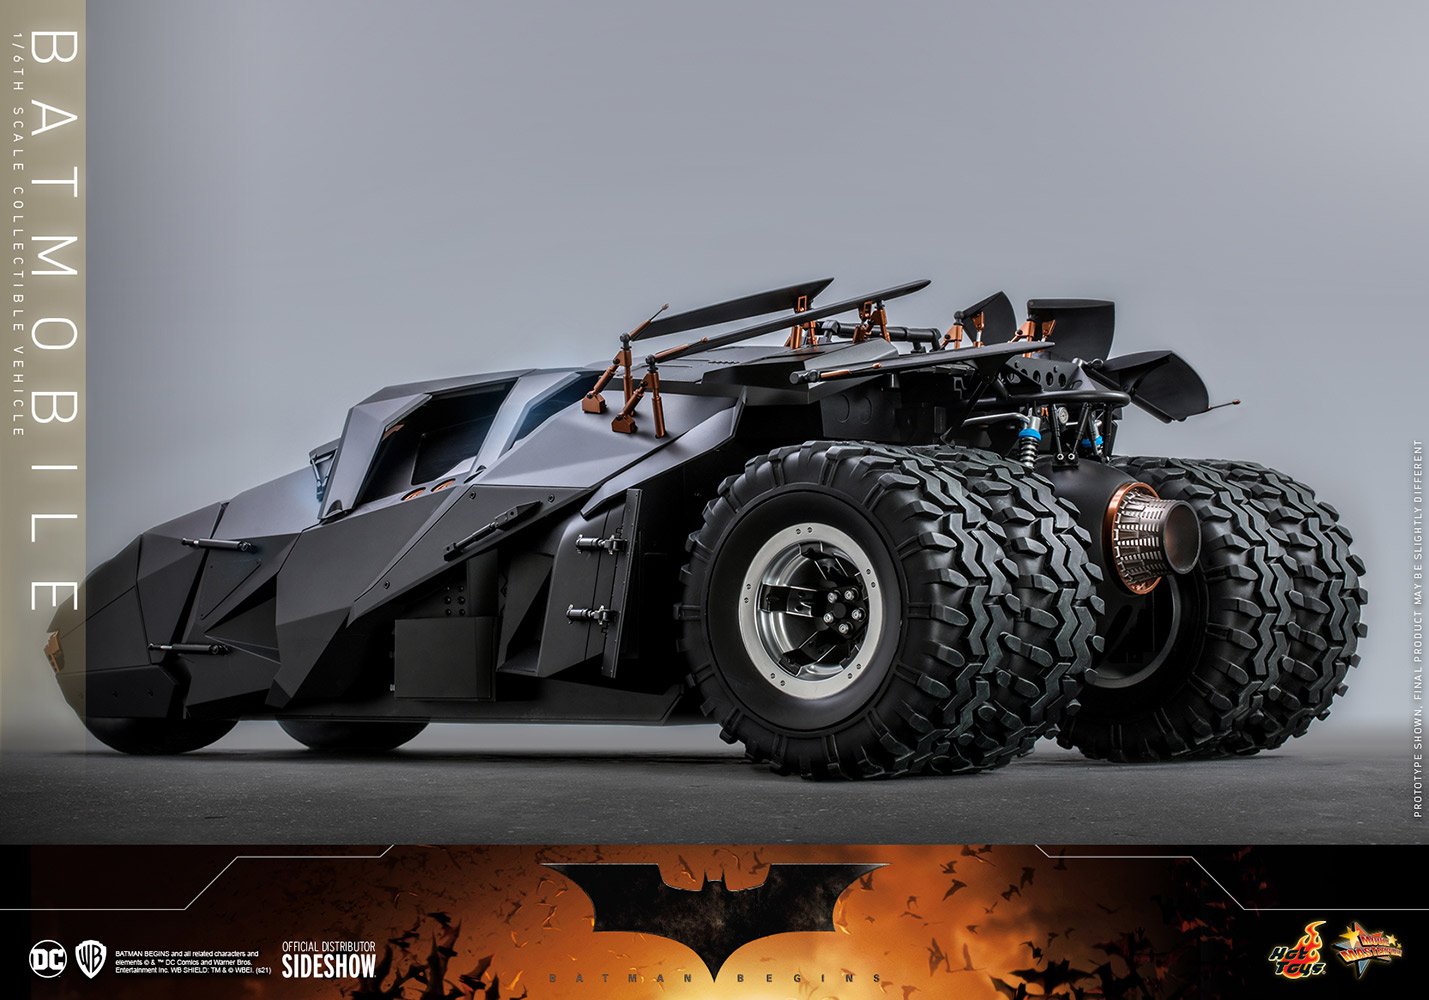 Hot Wheels DC Universe Armored Batman Deluxe Vehicle 